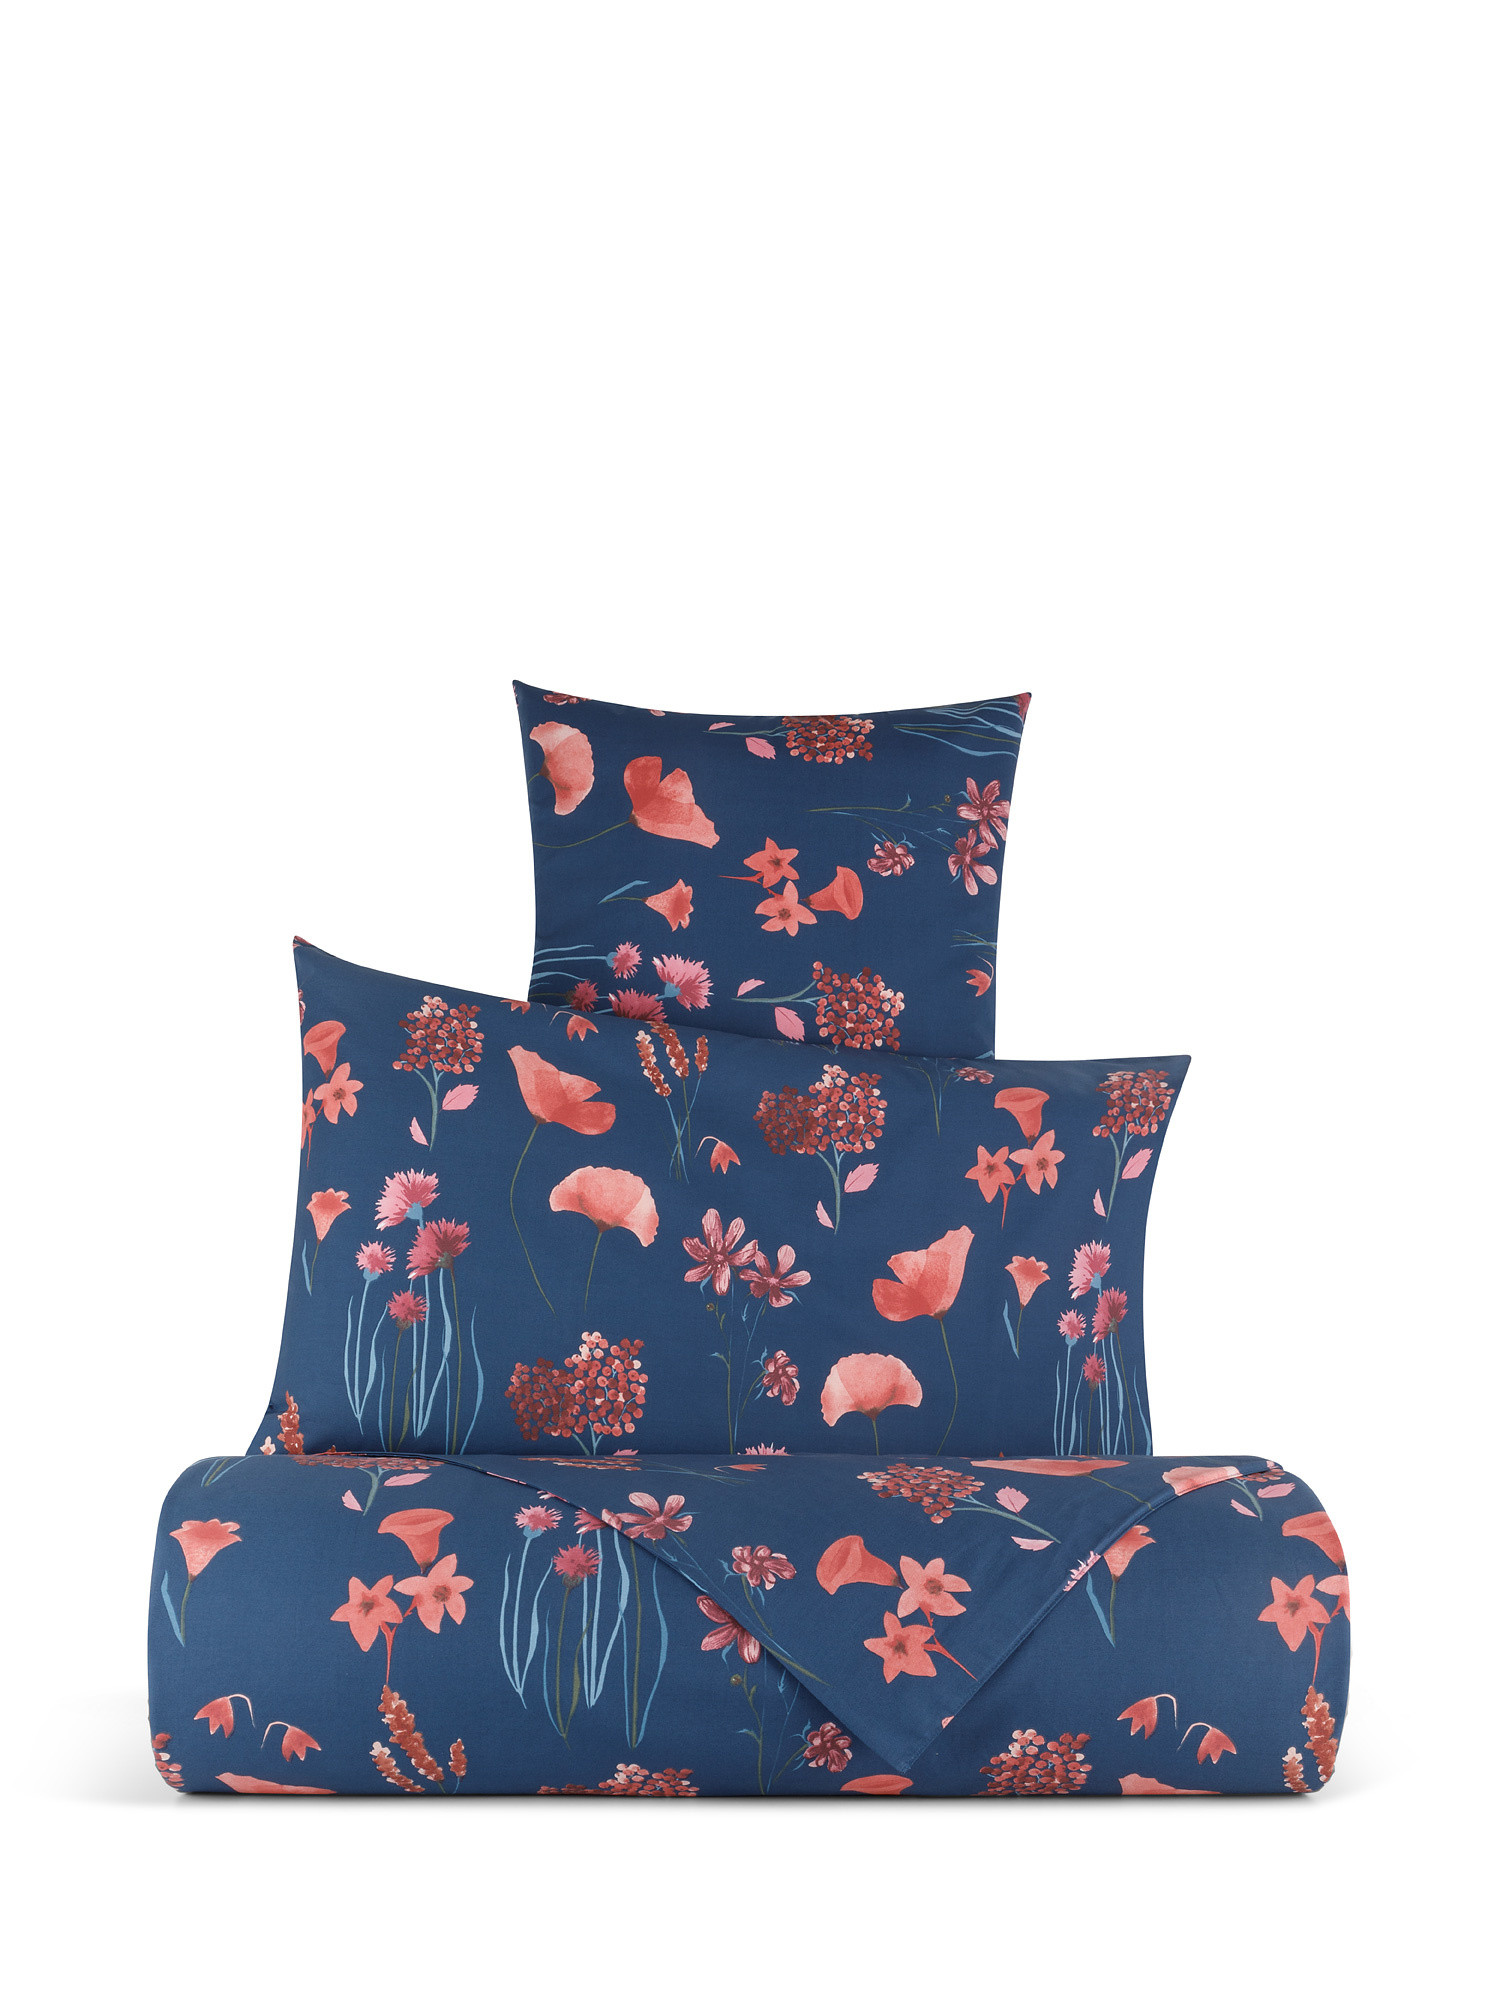 Floral pattern cotton percale sheet set, Blue, large image number 0